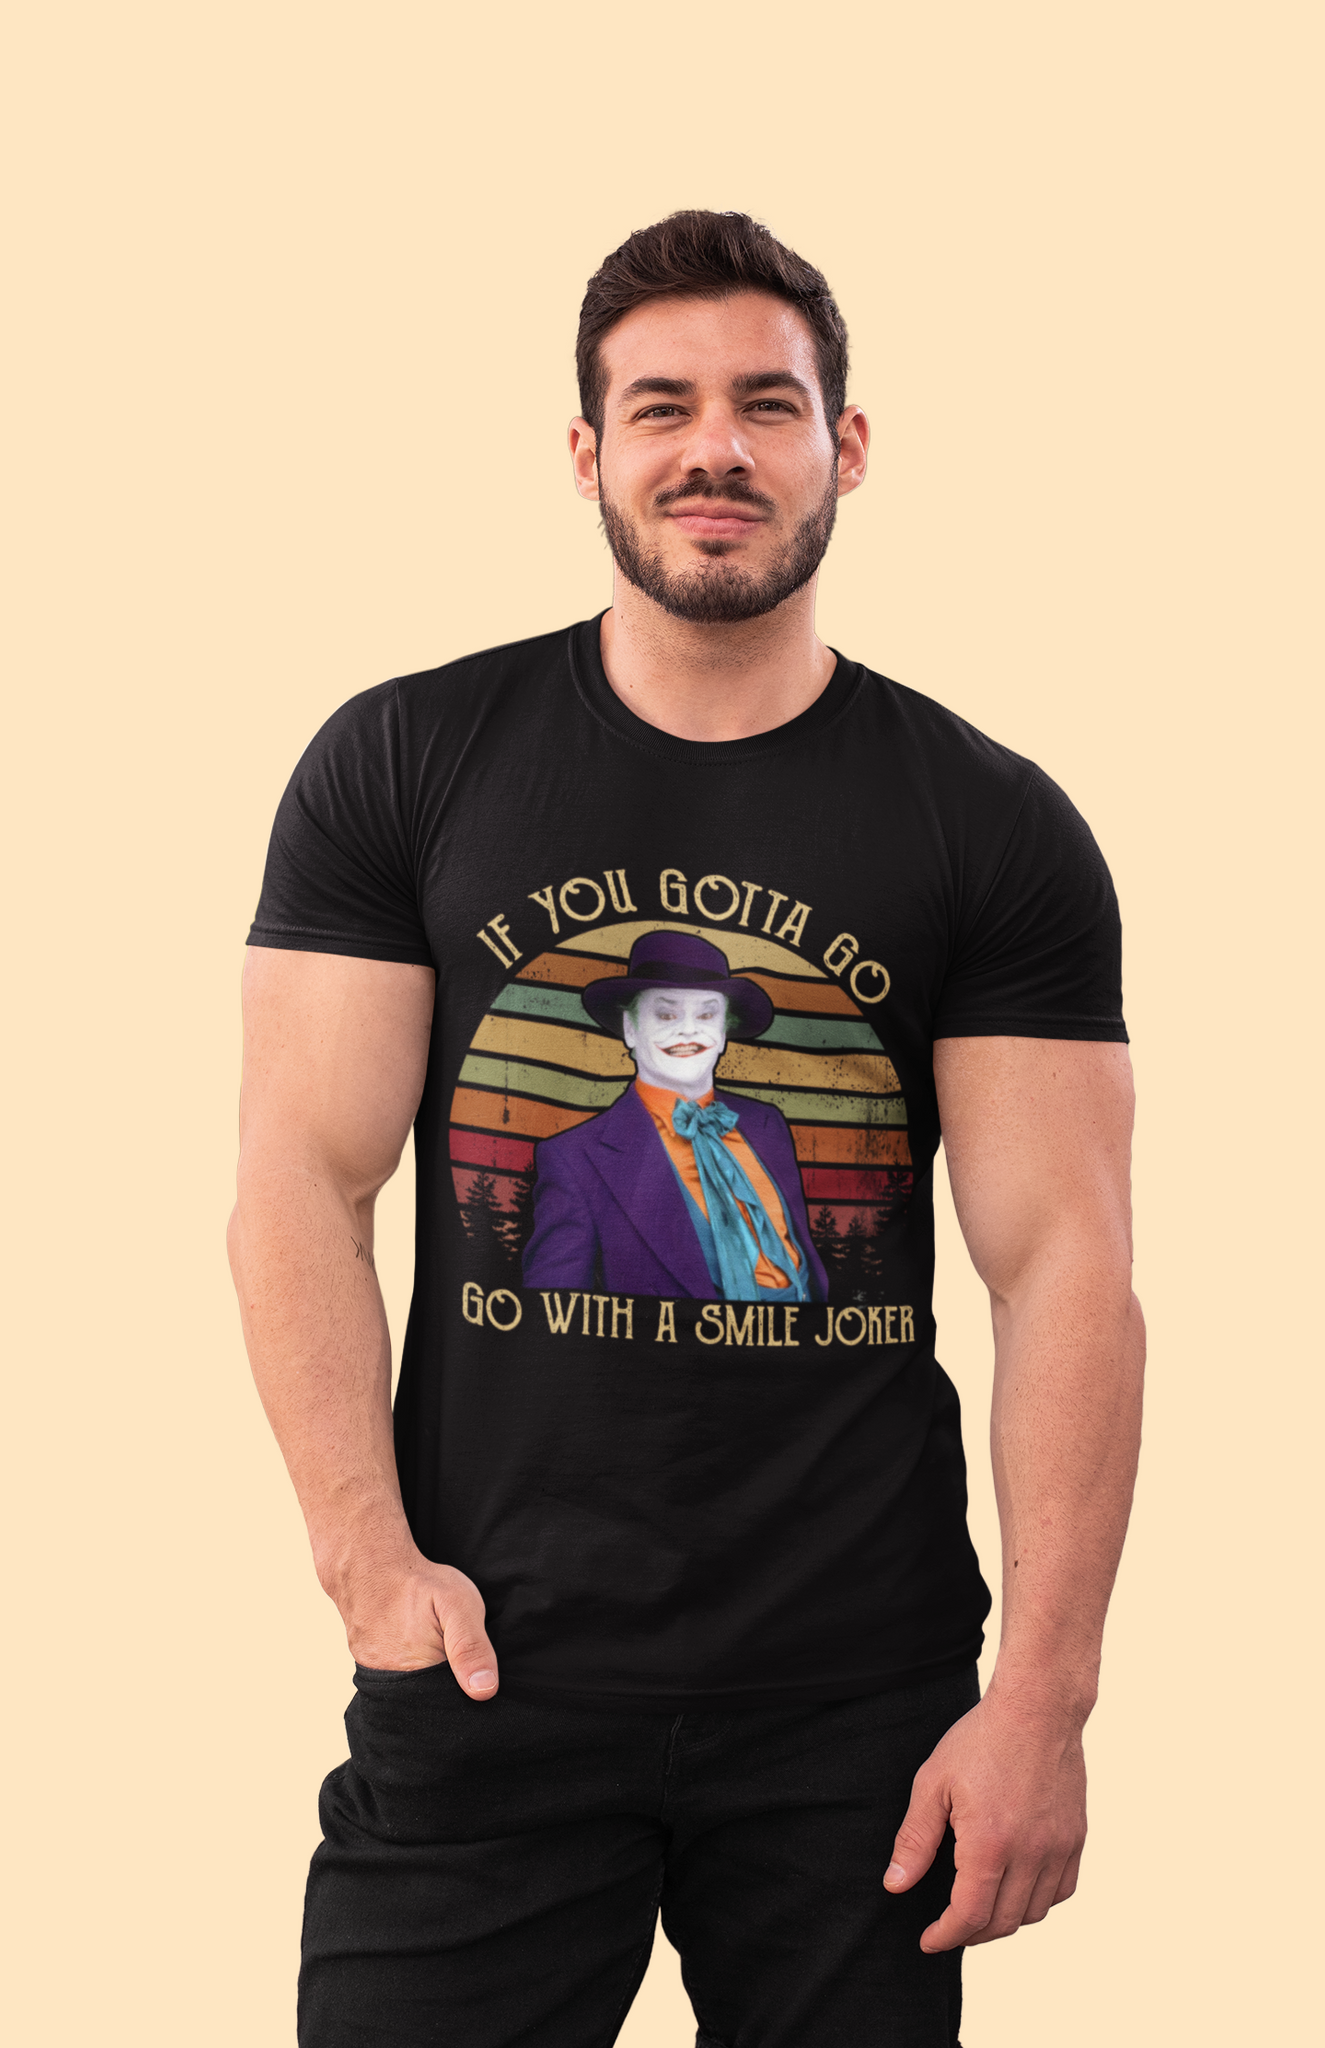 Joker Vintage T Shirt, Joker The Gangster Tshirt, If You Gotta Go Go With A Smile Joker Shirt, Halloween Gifts